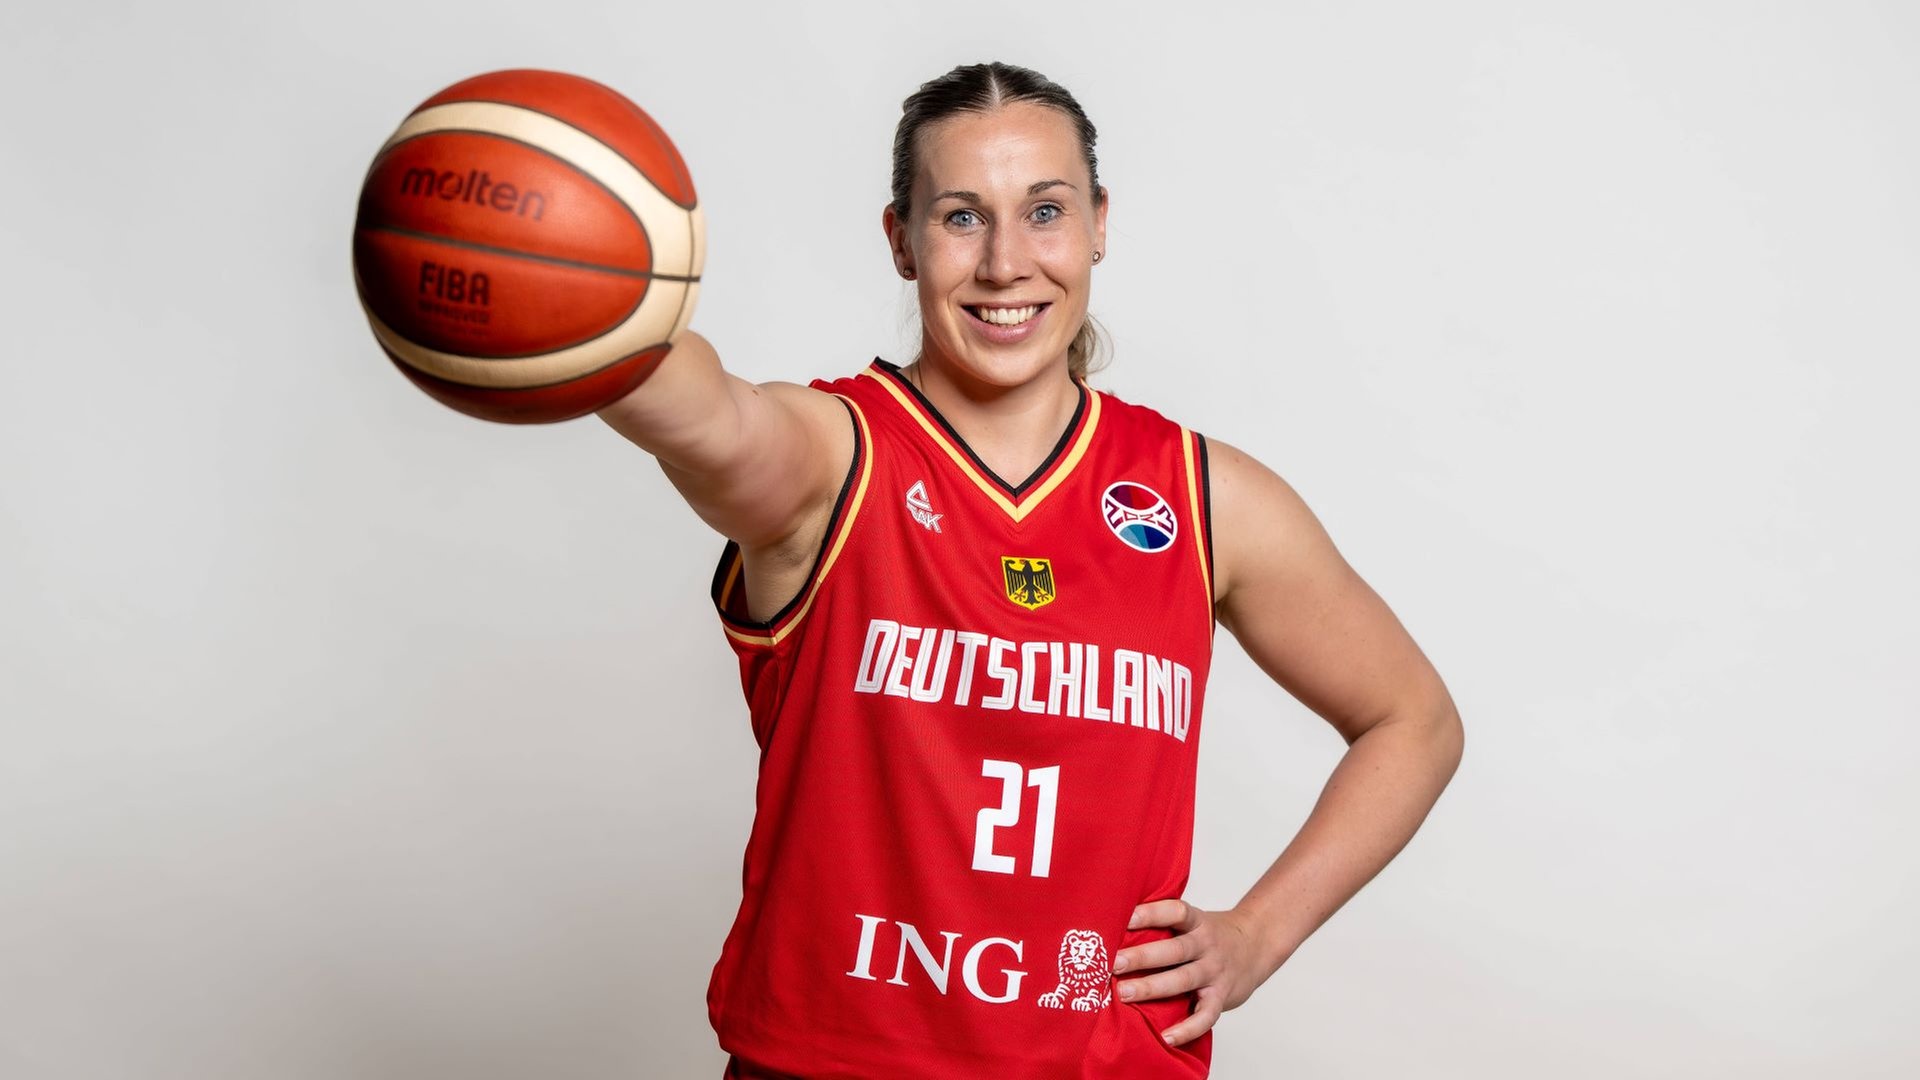 Basketballerin Brunckhorst Erst die EM, dann Olympia? NDR.de - Sport